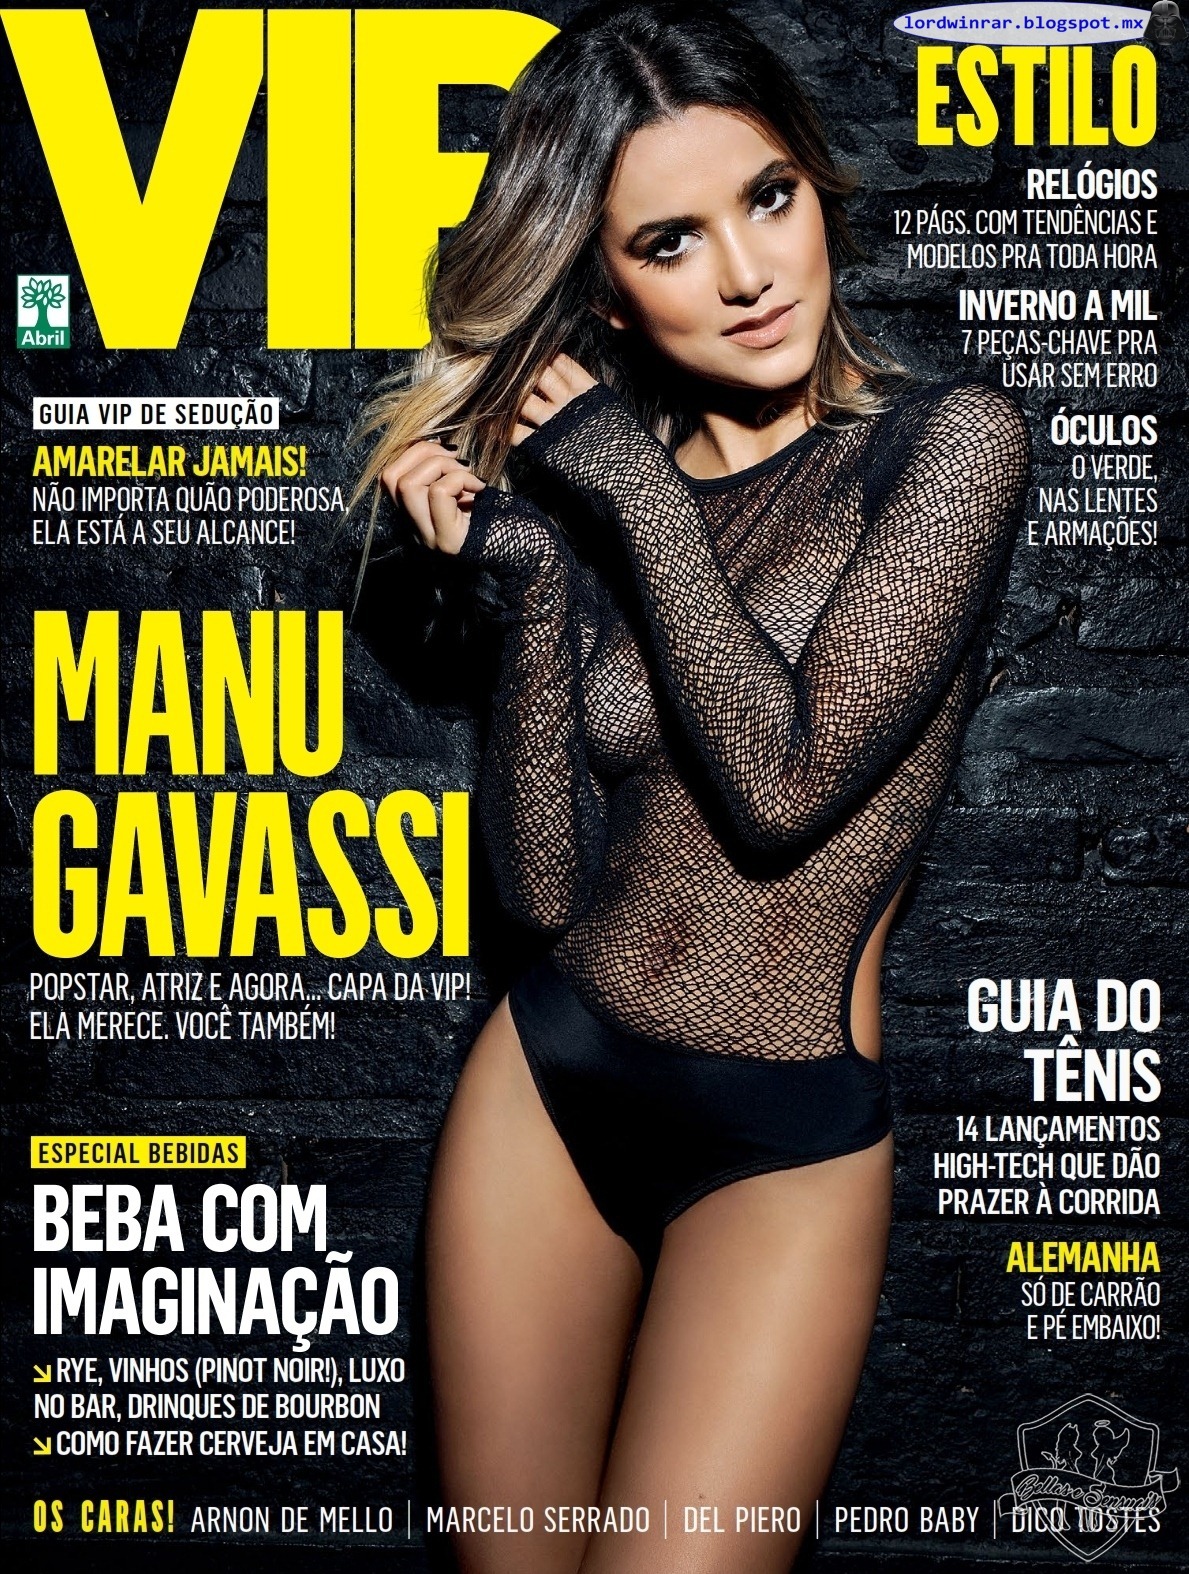   Manu Gavassi - Vip 2016 Mayo (25 Fotos HQ)Manu Gavassi semi desnuda en la revista